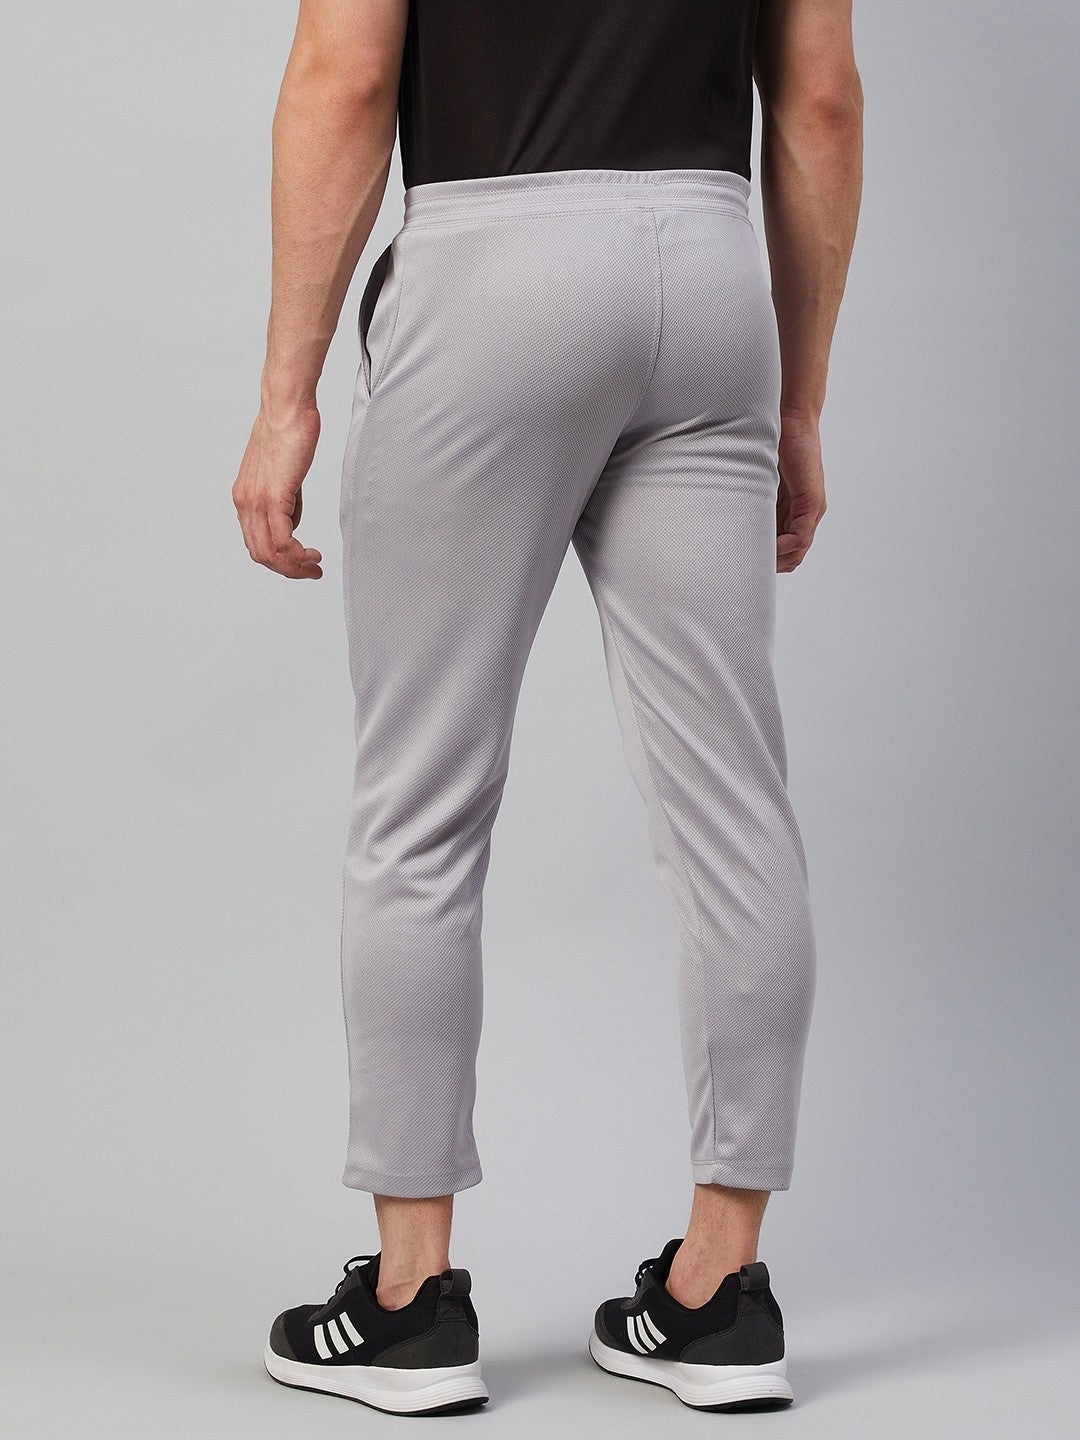 Men Printed Olive/Grey Hiking Track Pants (Pack of 2)